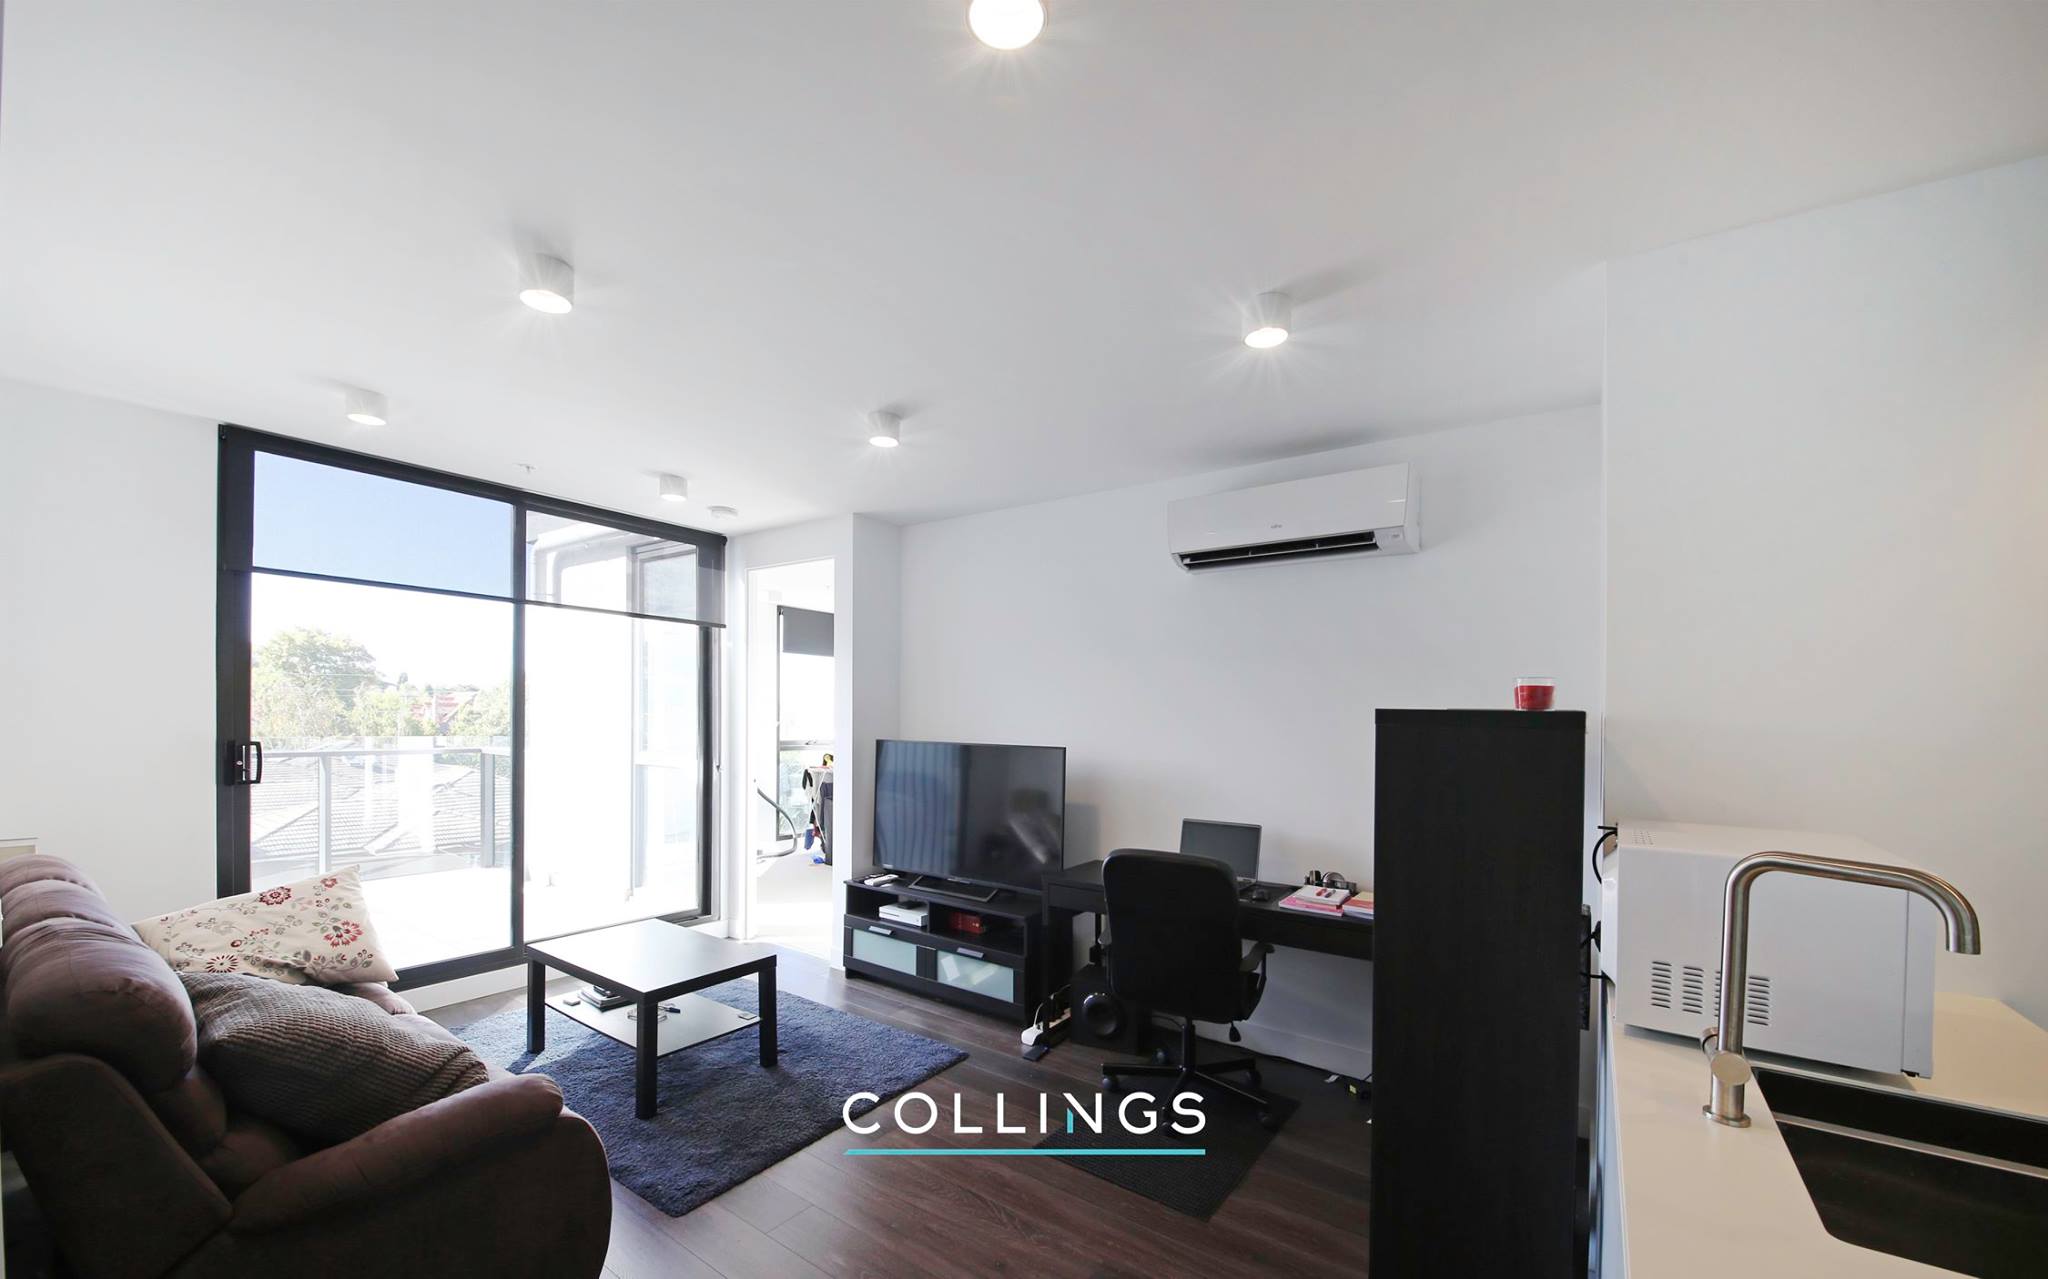 Collings Real Estate Northcote | 2/405 High Street, Northcote, Victoria 3070 | +61 3 9486 2000